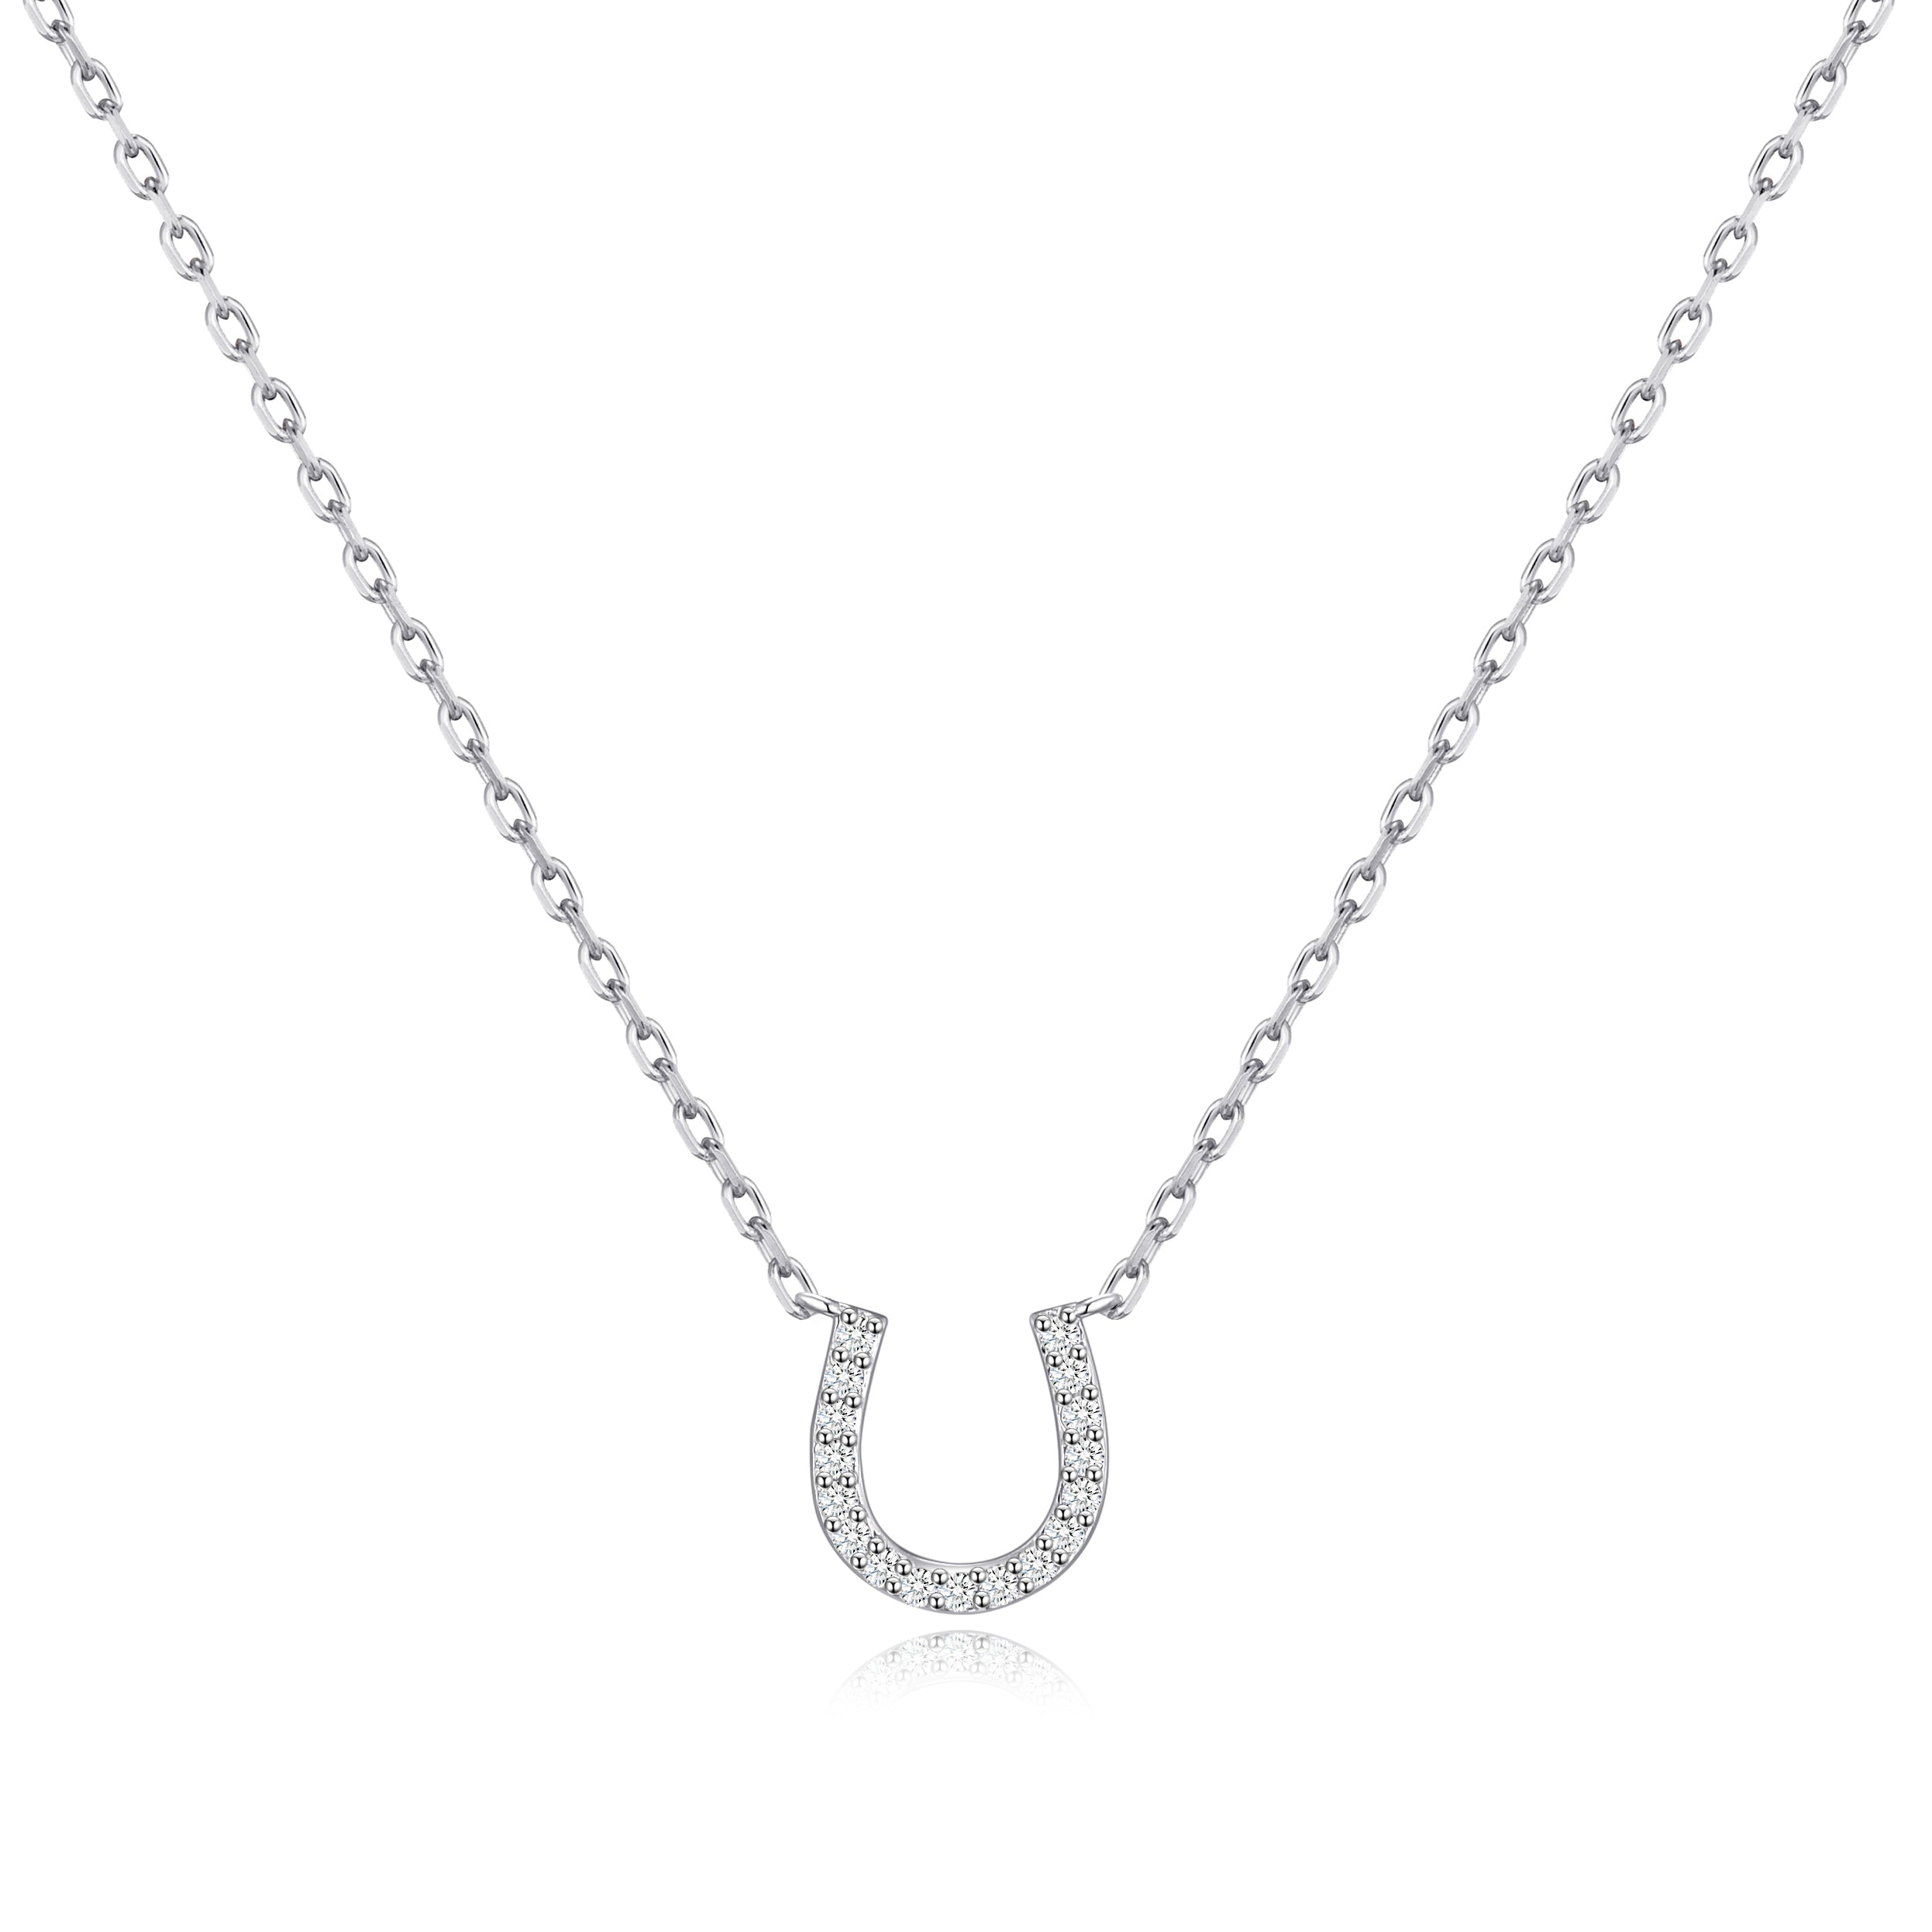 Horseshoe Necklace Created with Zircondia® Crystals by Philip Jones Jewellery